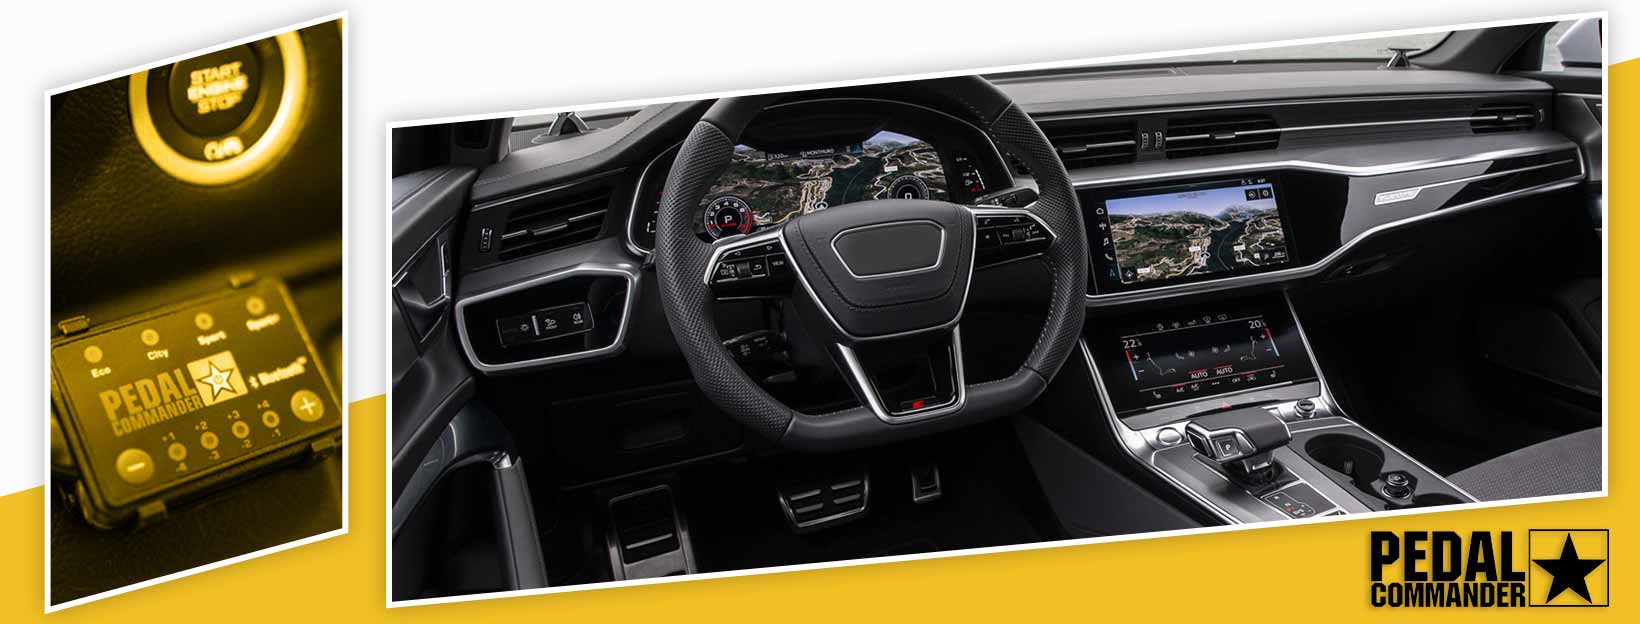 Pedal Commander for Audi A6 - interior